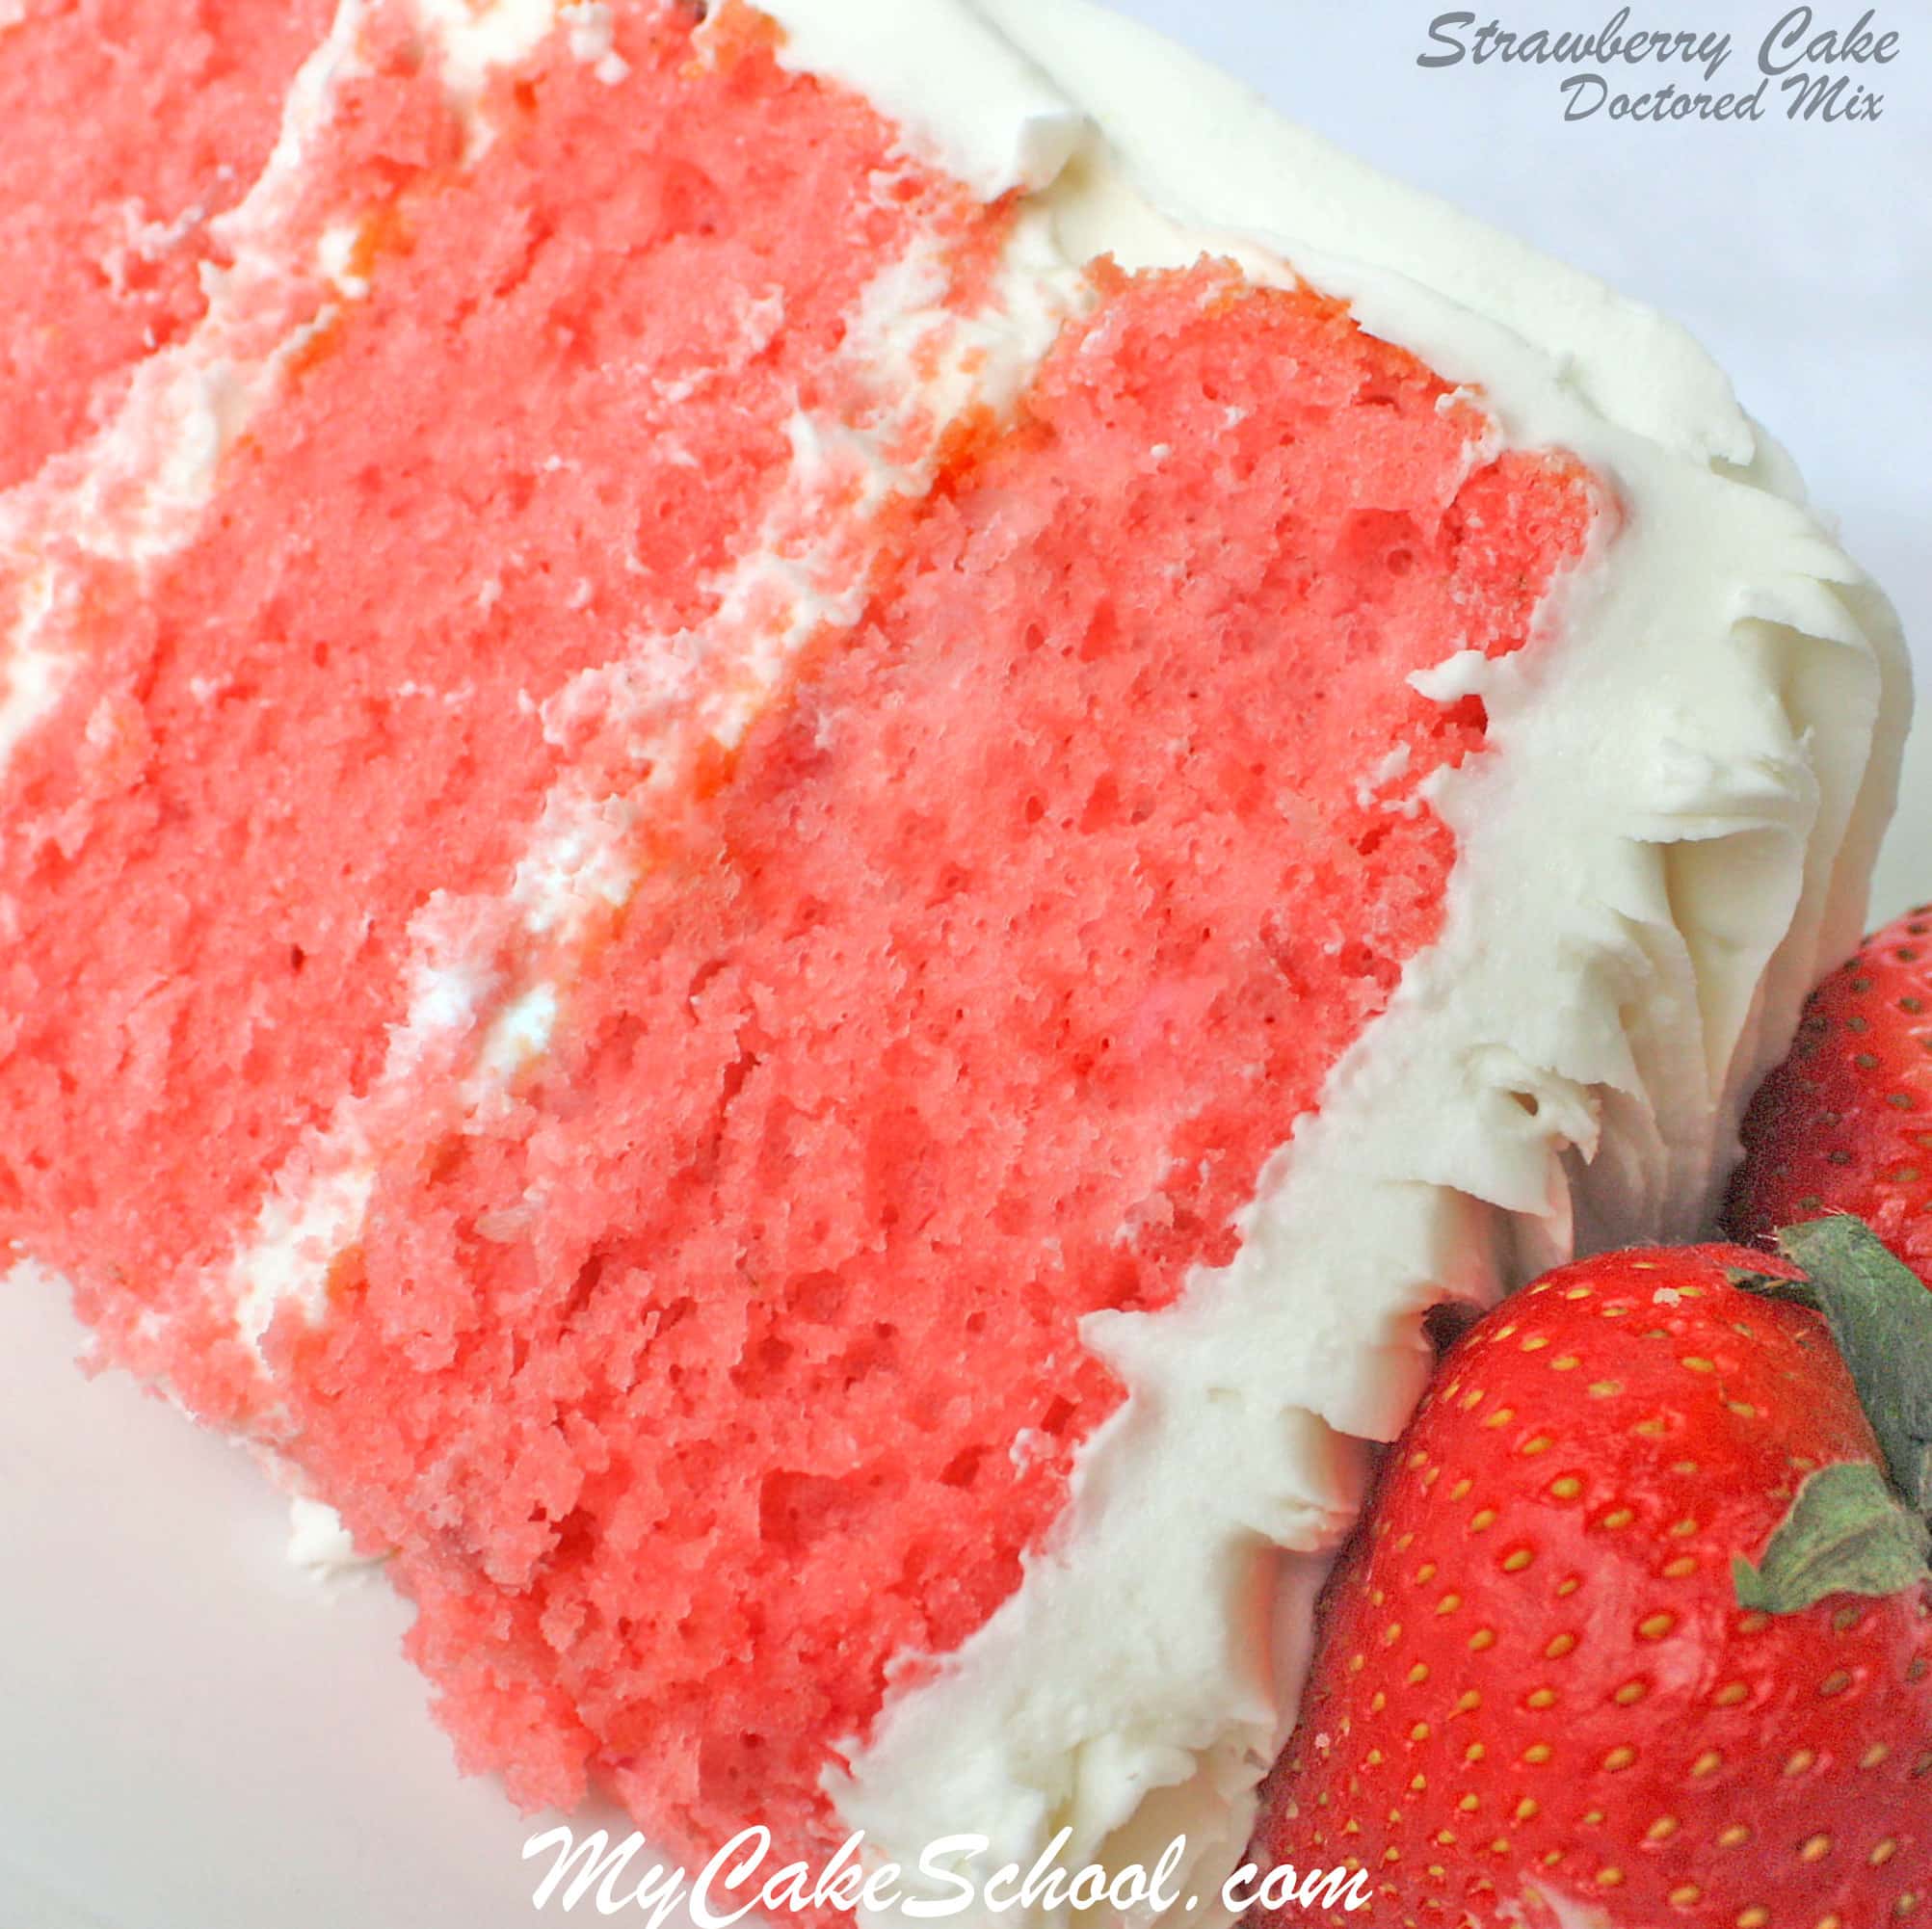 Strawberry Cake Doctored Recipe Image